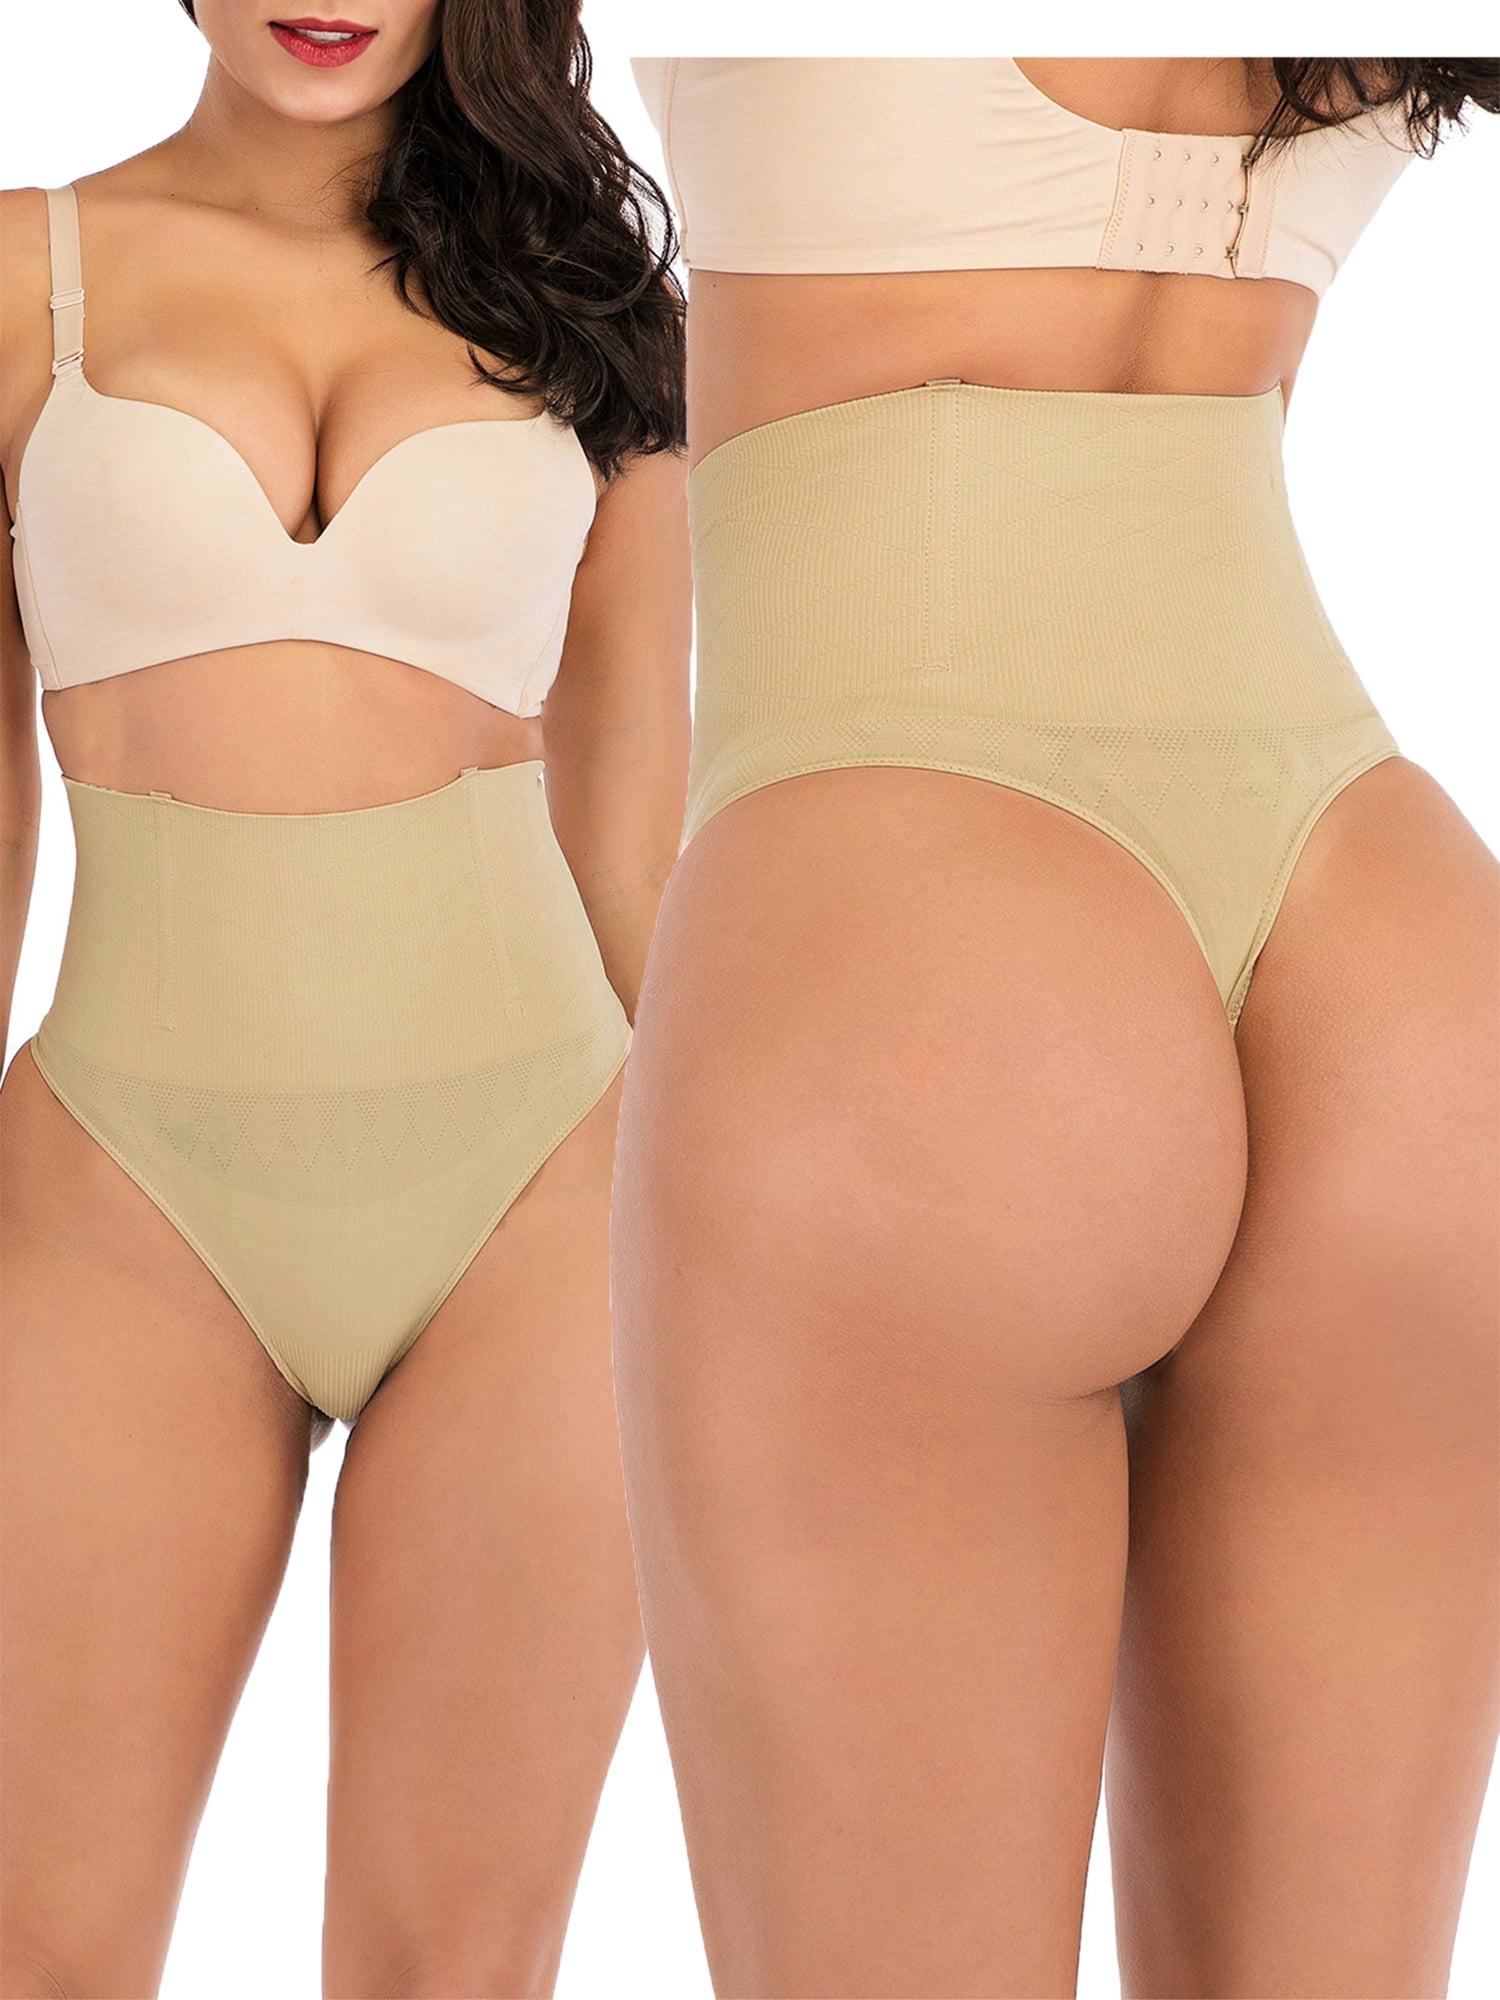 DODOING Womens Butt Lifter Shapewear Shapewear Tummy Control Panties Butt  Lifter Panty Booty Enhancer Slimming Body Shaper for Women 